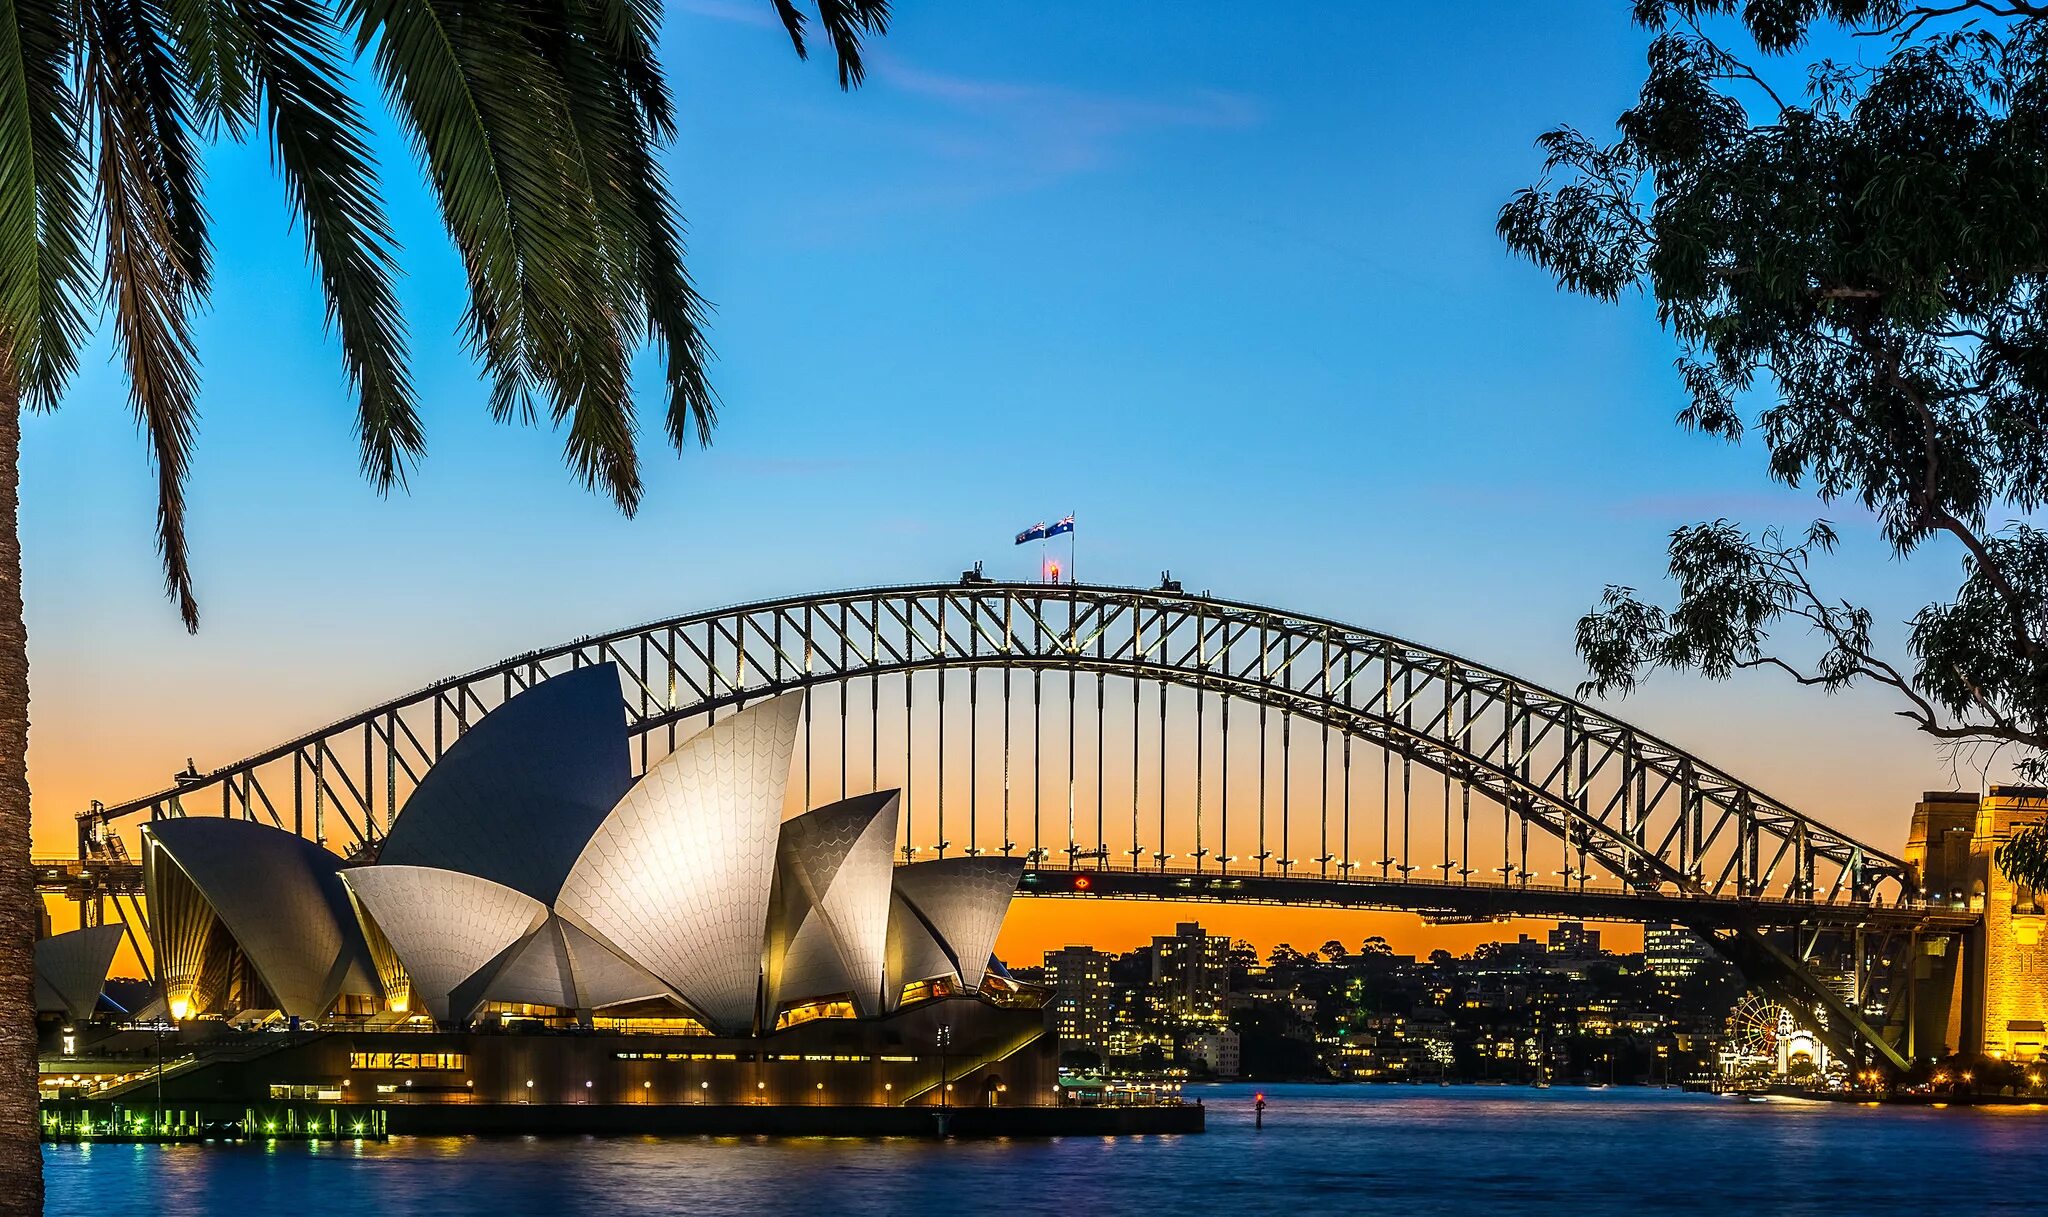 Harbour bridge. Сиднейский мост Харбор-бридж. Сиднейский Харбор-бридж, Австралия. Мост Харбор бридж в Австралии. Мост Харбор в Сиднее и опера.